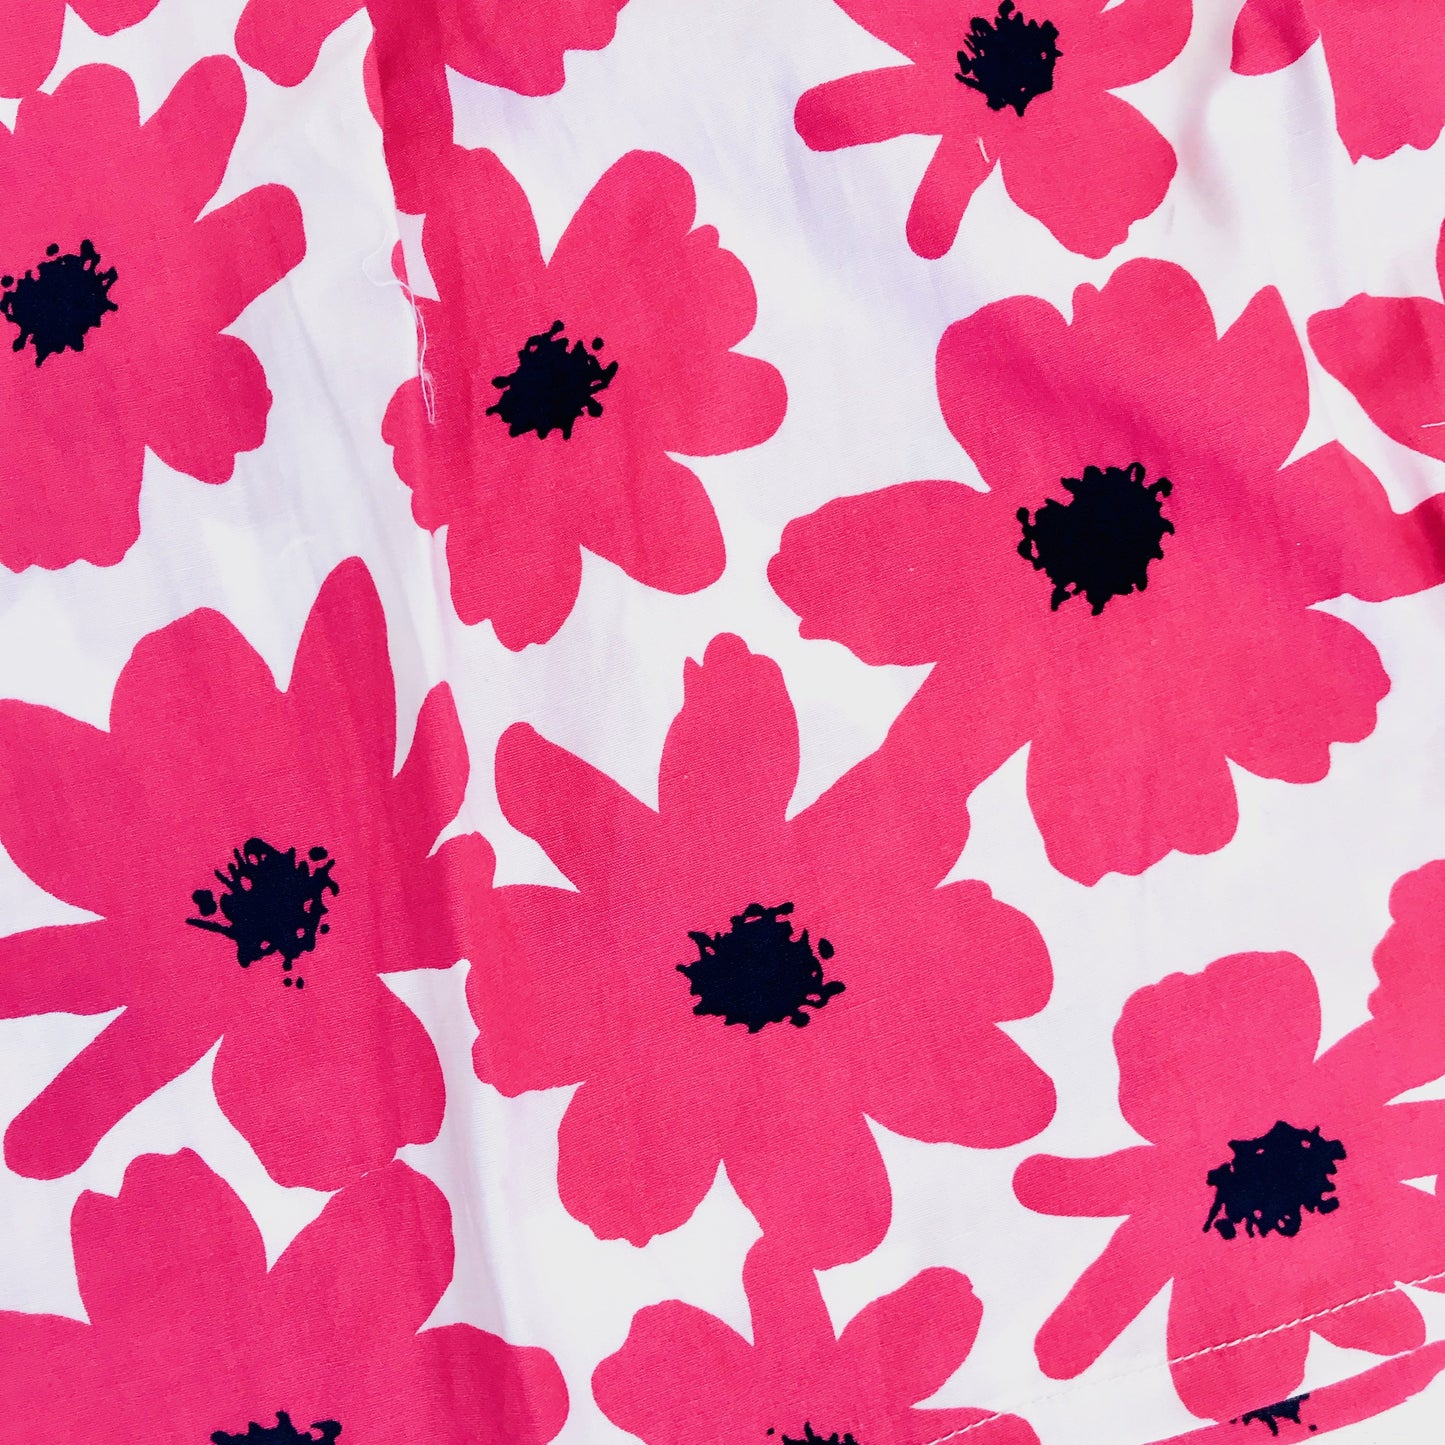 Tea Rose Dress in Edgy Floral Pink Print - Lil' Tati